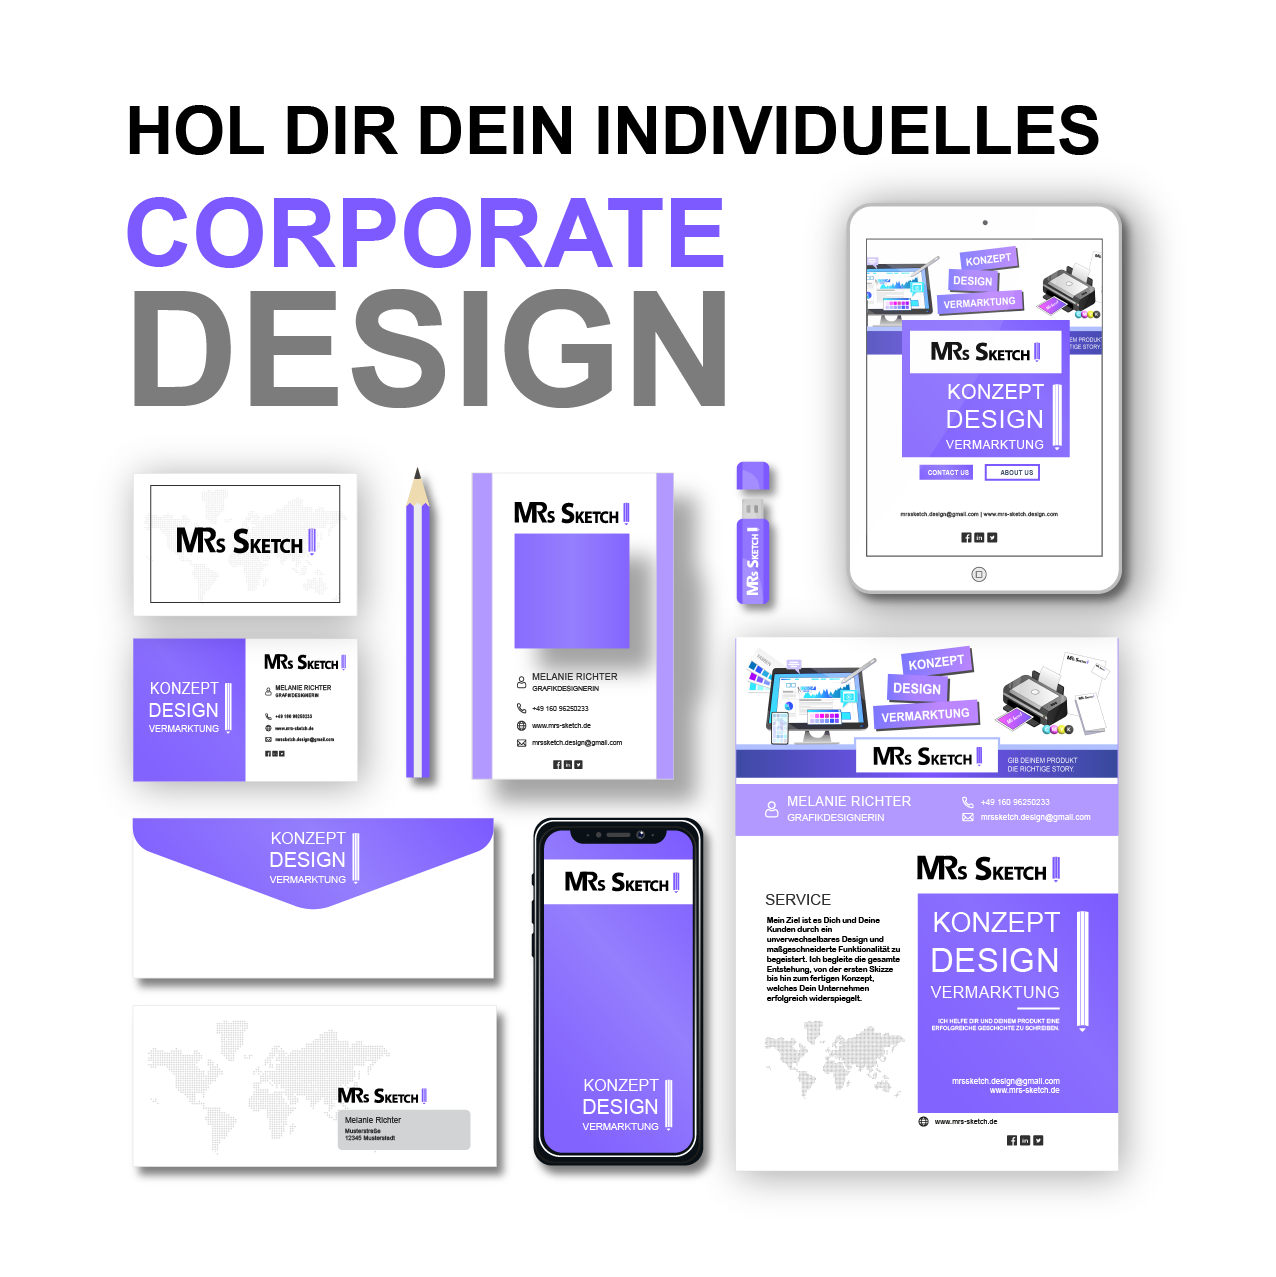 Corporate Design